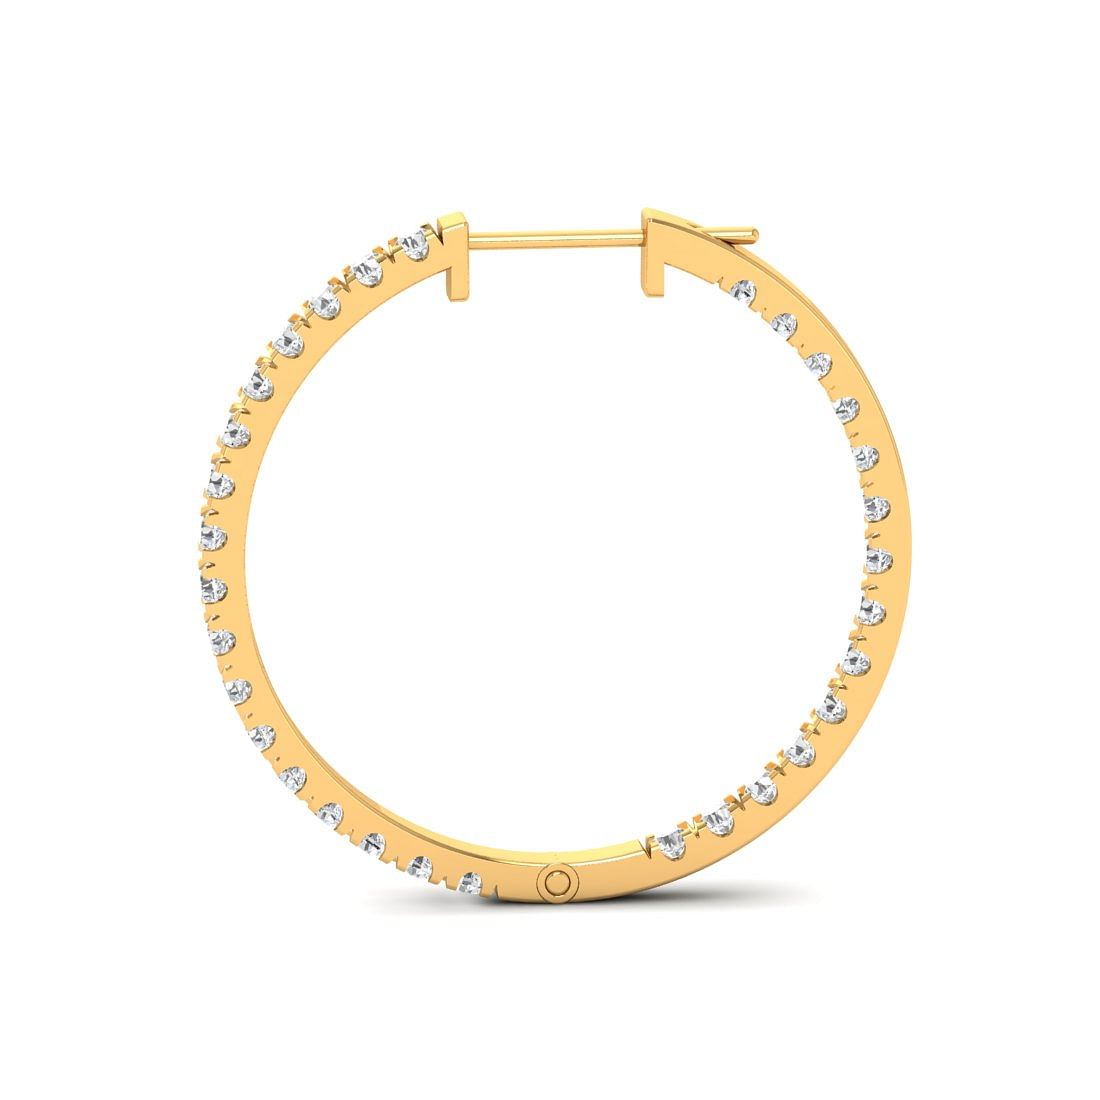 14k Yellow Gold Classic Circular Diamond Earrings for women